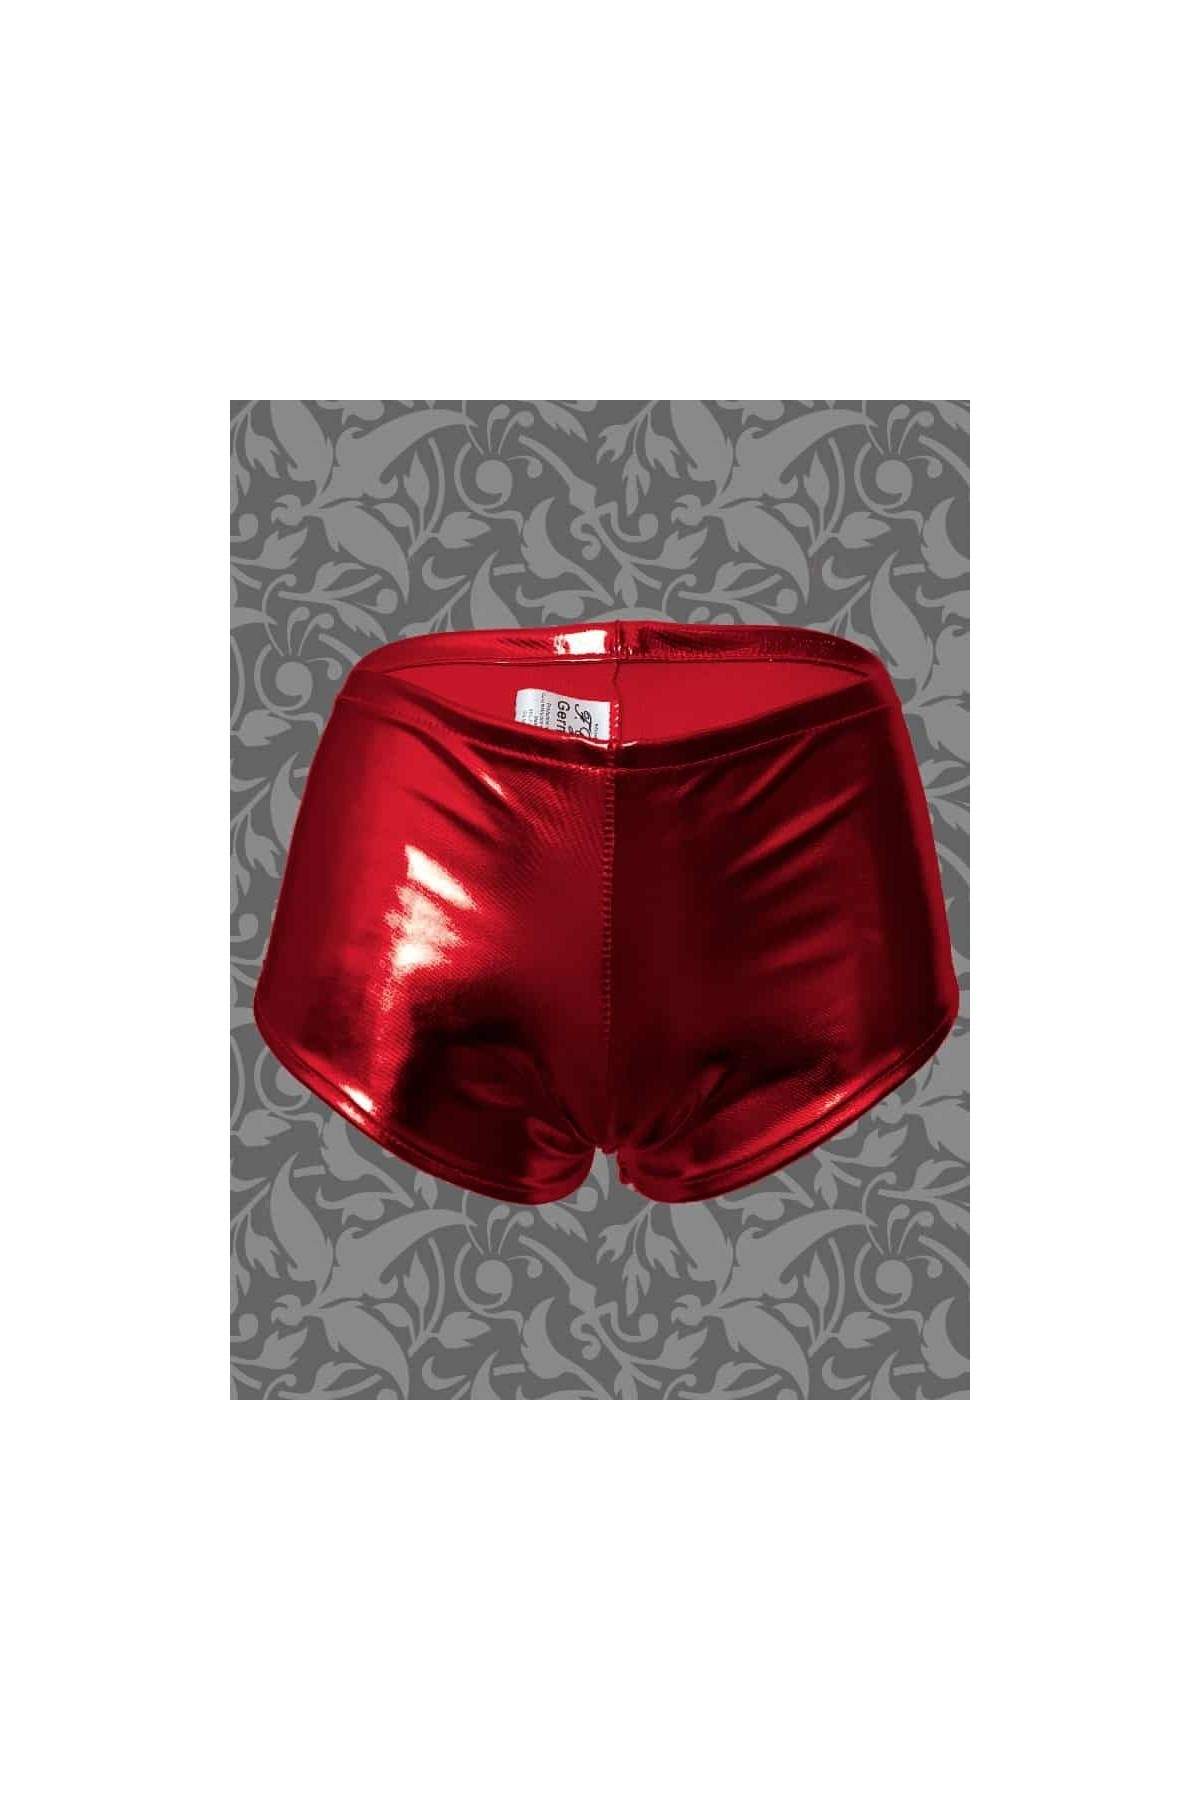 f.girth wetlook GoGo Hotpants red Metallic 10,00 € - 